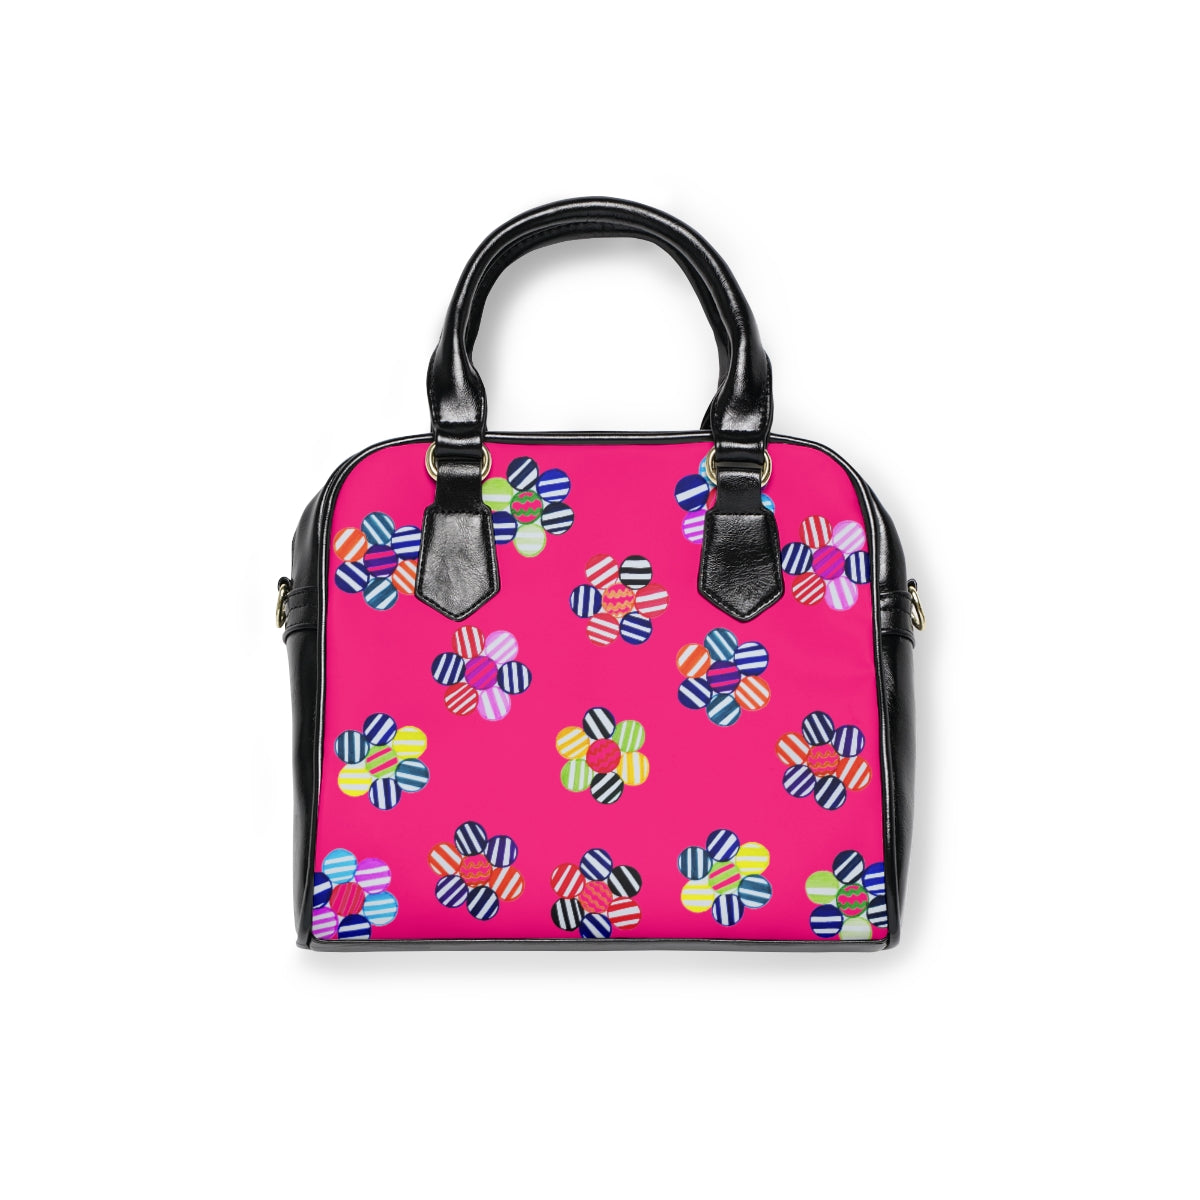 Hot pink geometric floral pu leather handbag